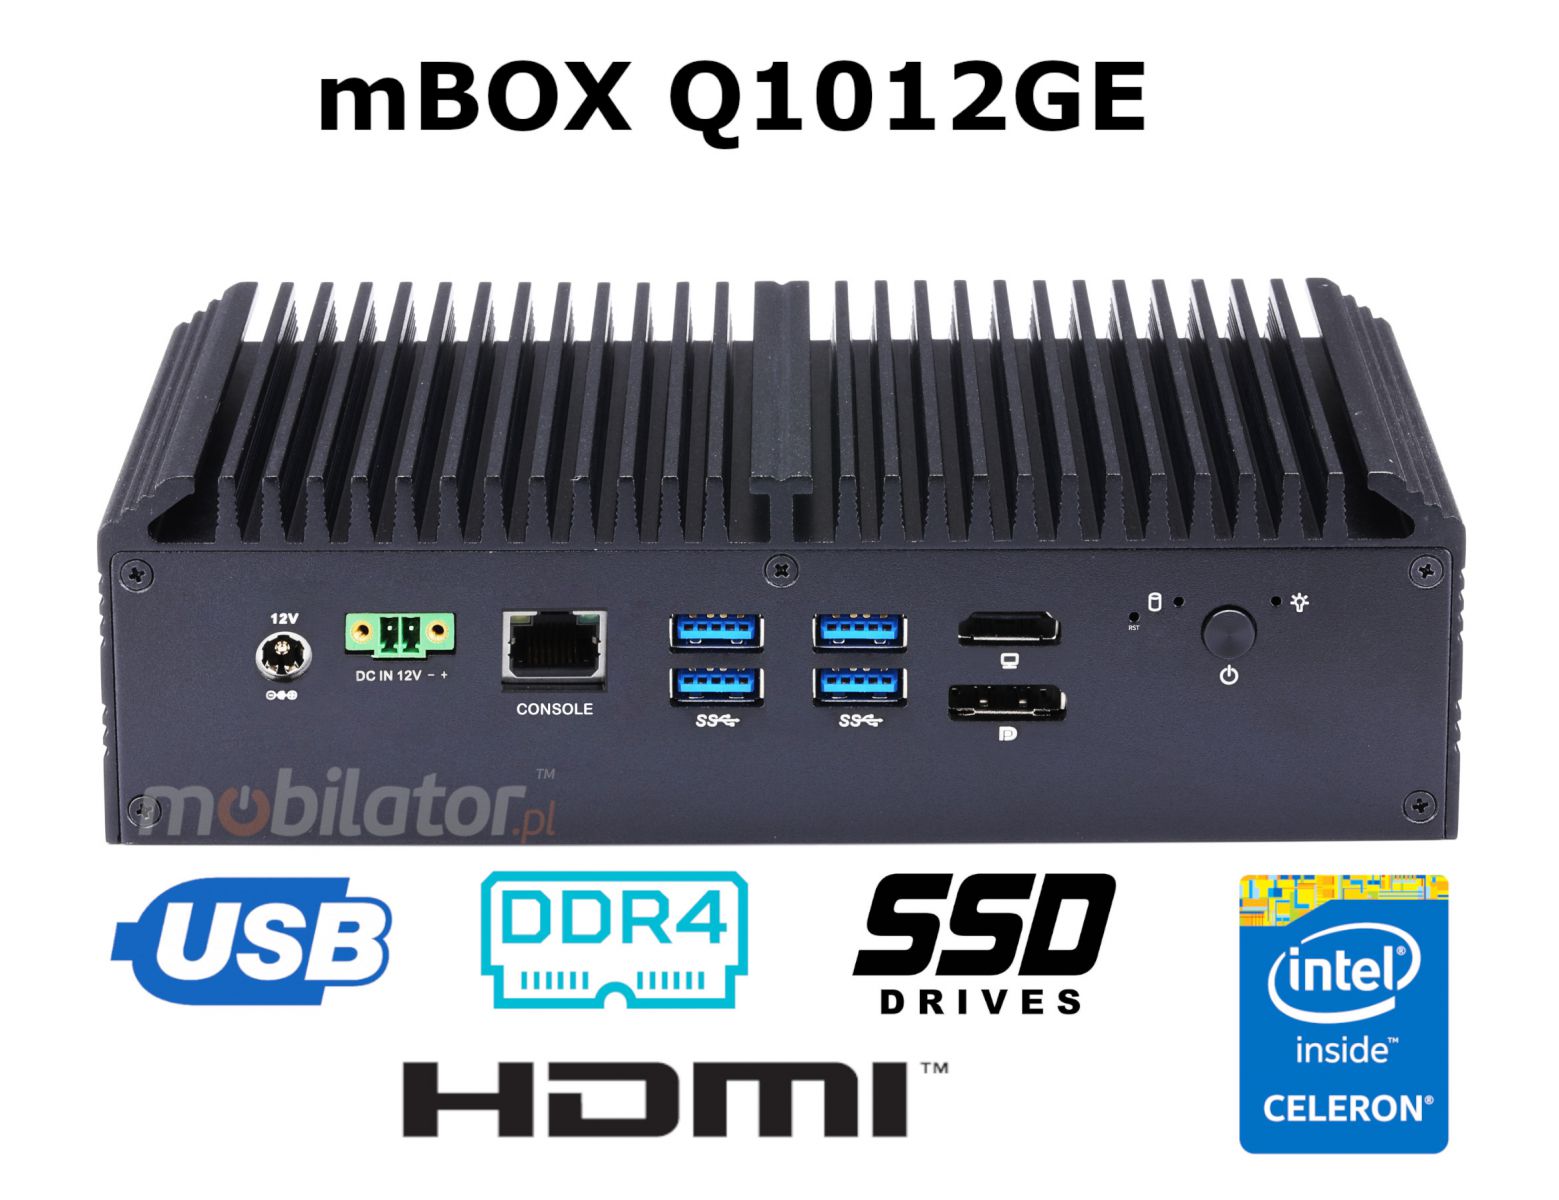 mBOX Q1012GE version 1, HDMI, intel Celeron